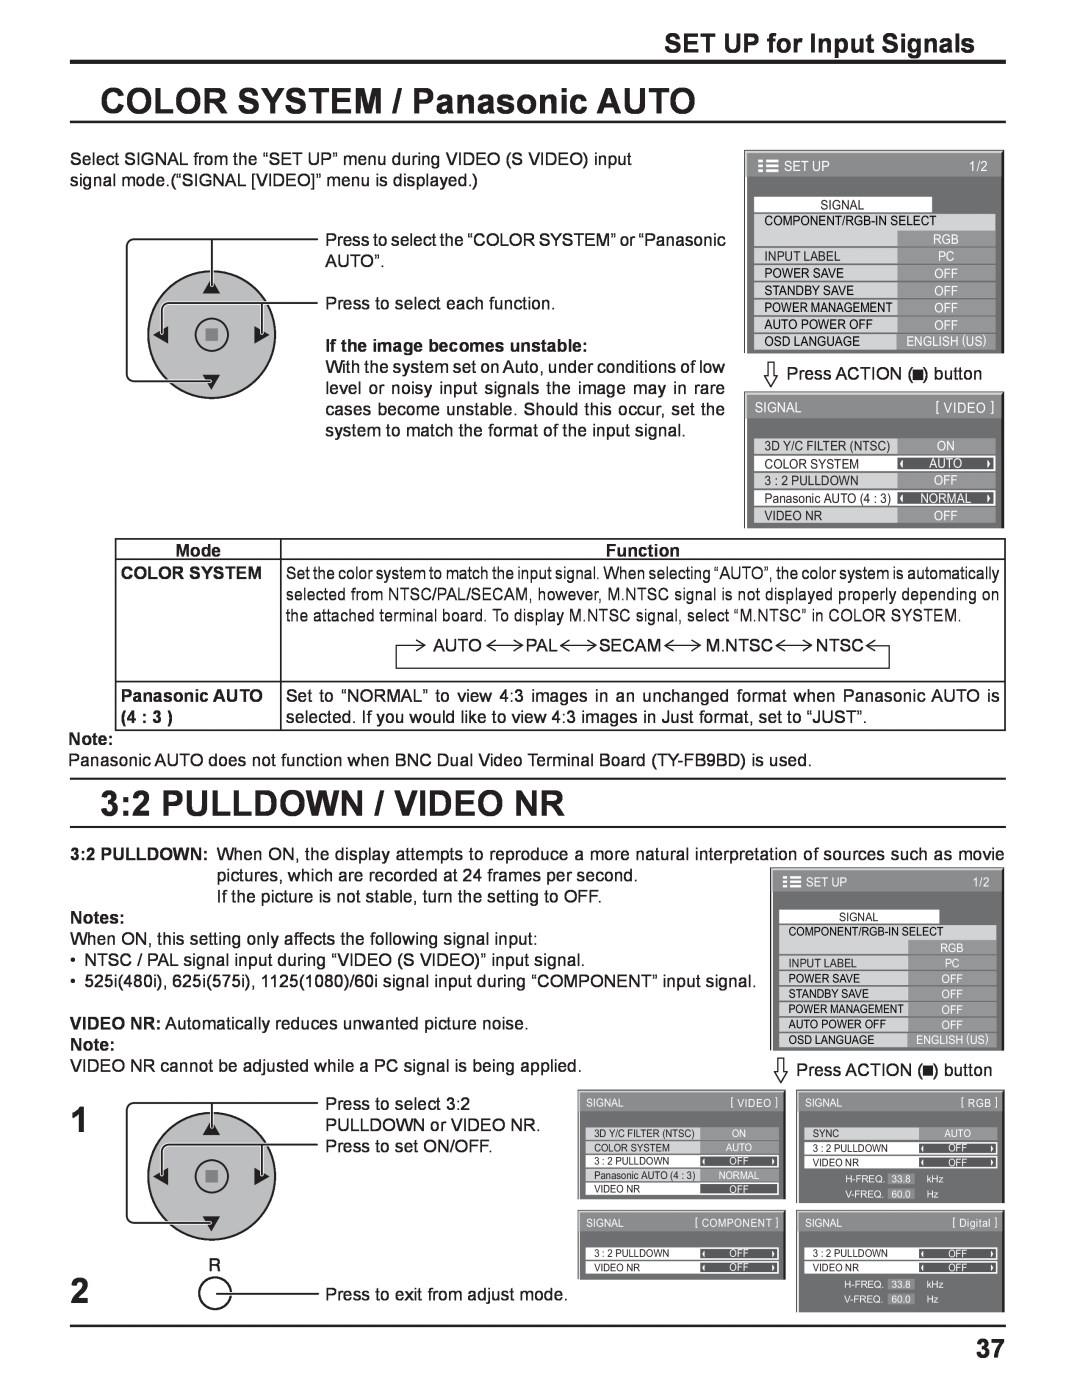 Panasonic TH-37PH10UK manual COLOR SYSTEM / Panasonic AUTO, Pulldown / Video Nr, SET UP for Input Signals 